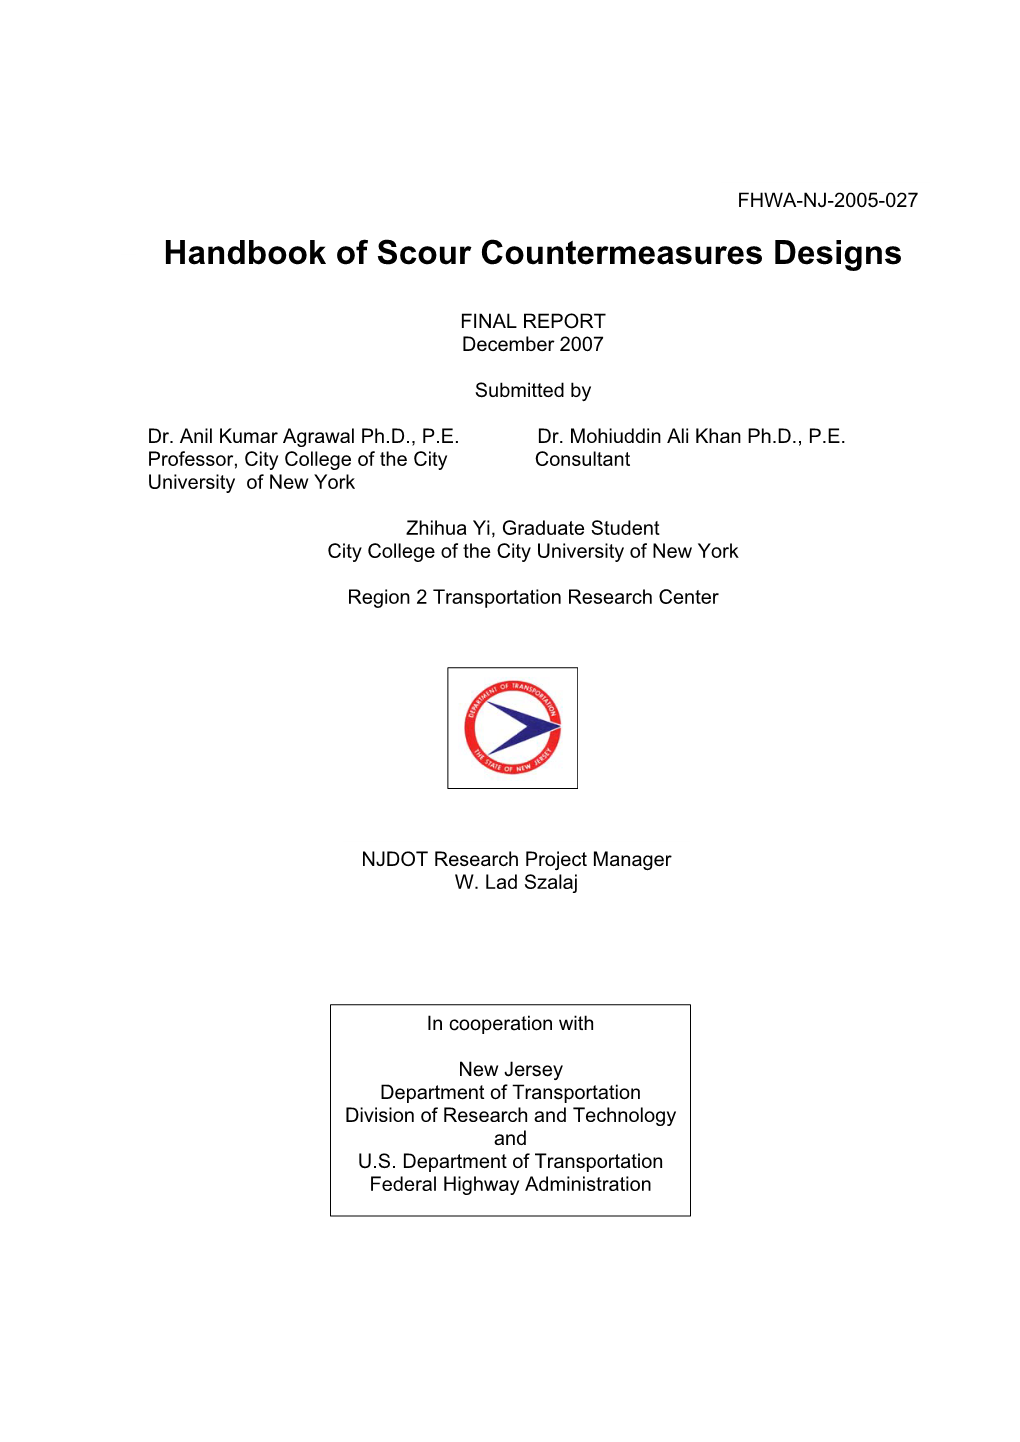 Handbook of Scour Countermeasures Designs Handbook of Scour Countermeasures Designs